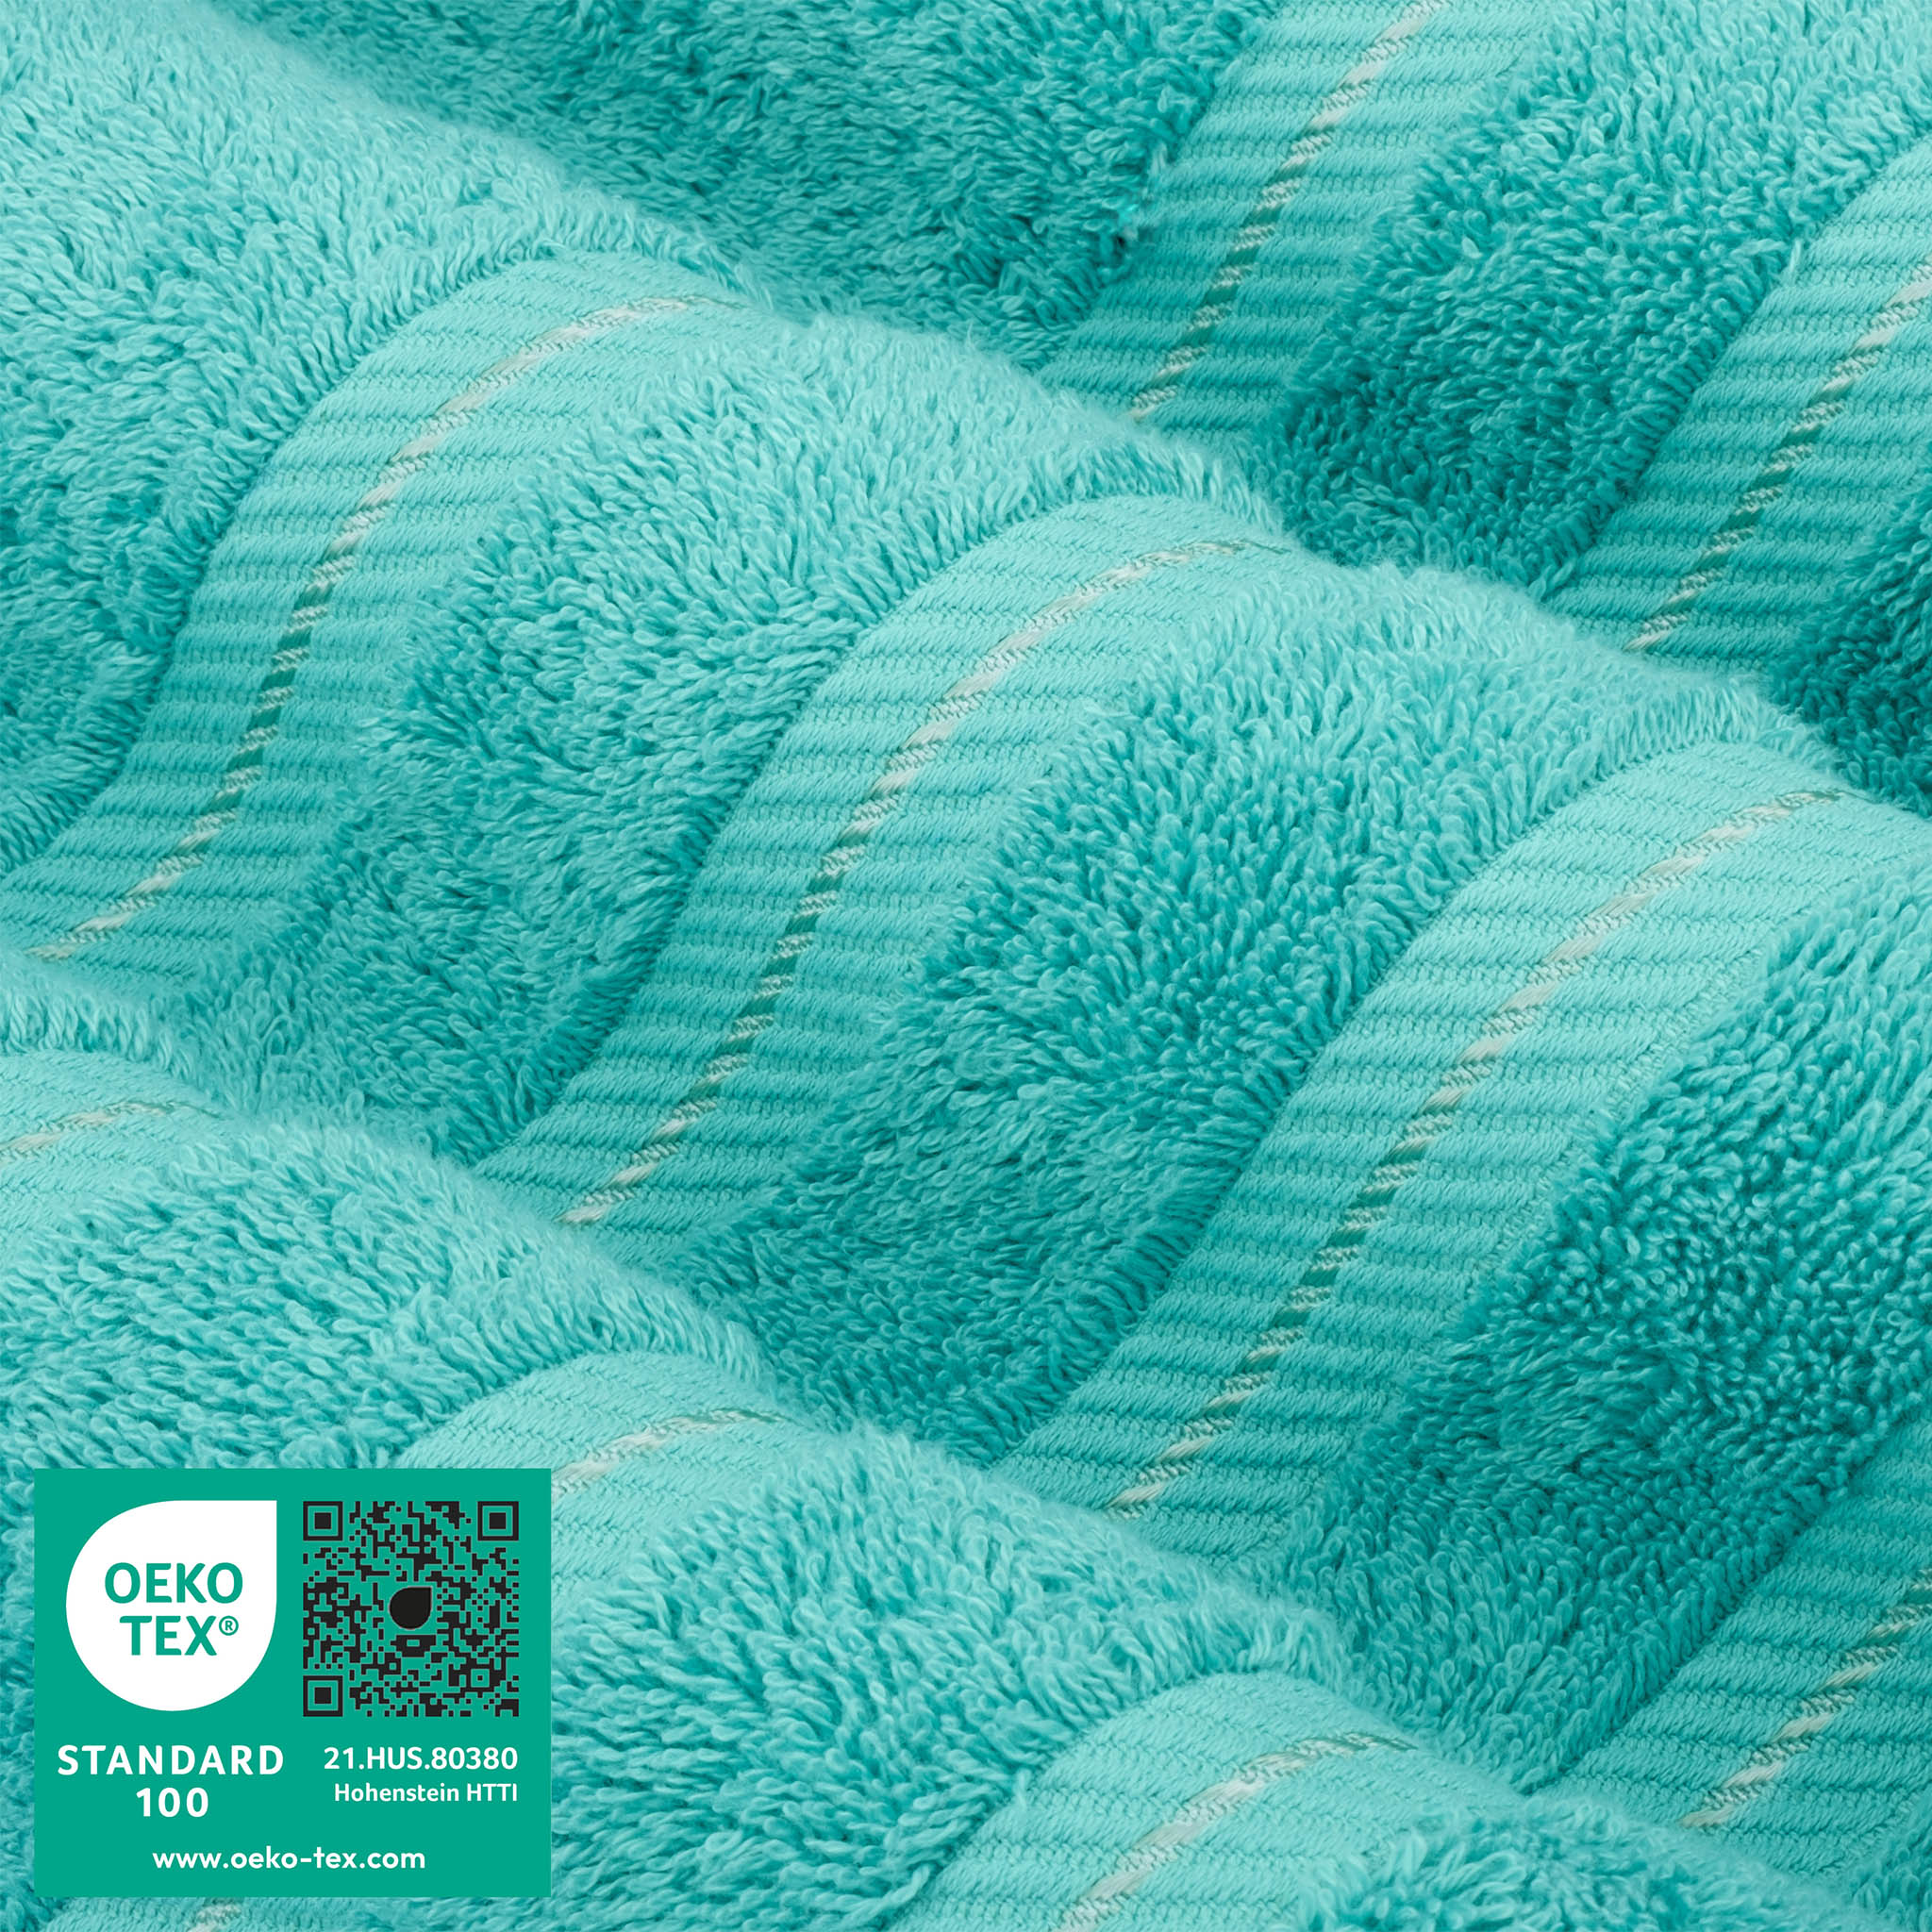 American Soft Linen 100% Turkish Cotton 4 Pack Bath Towel Set turquoise-blue-3